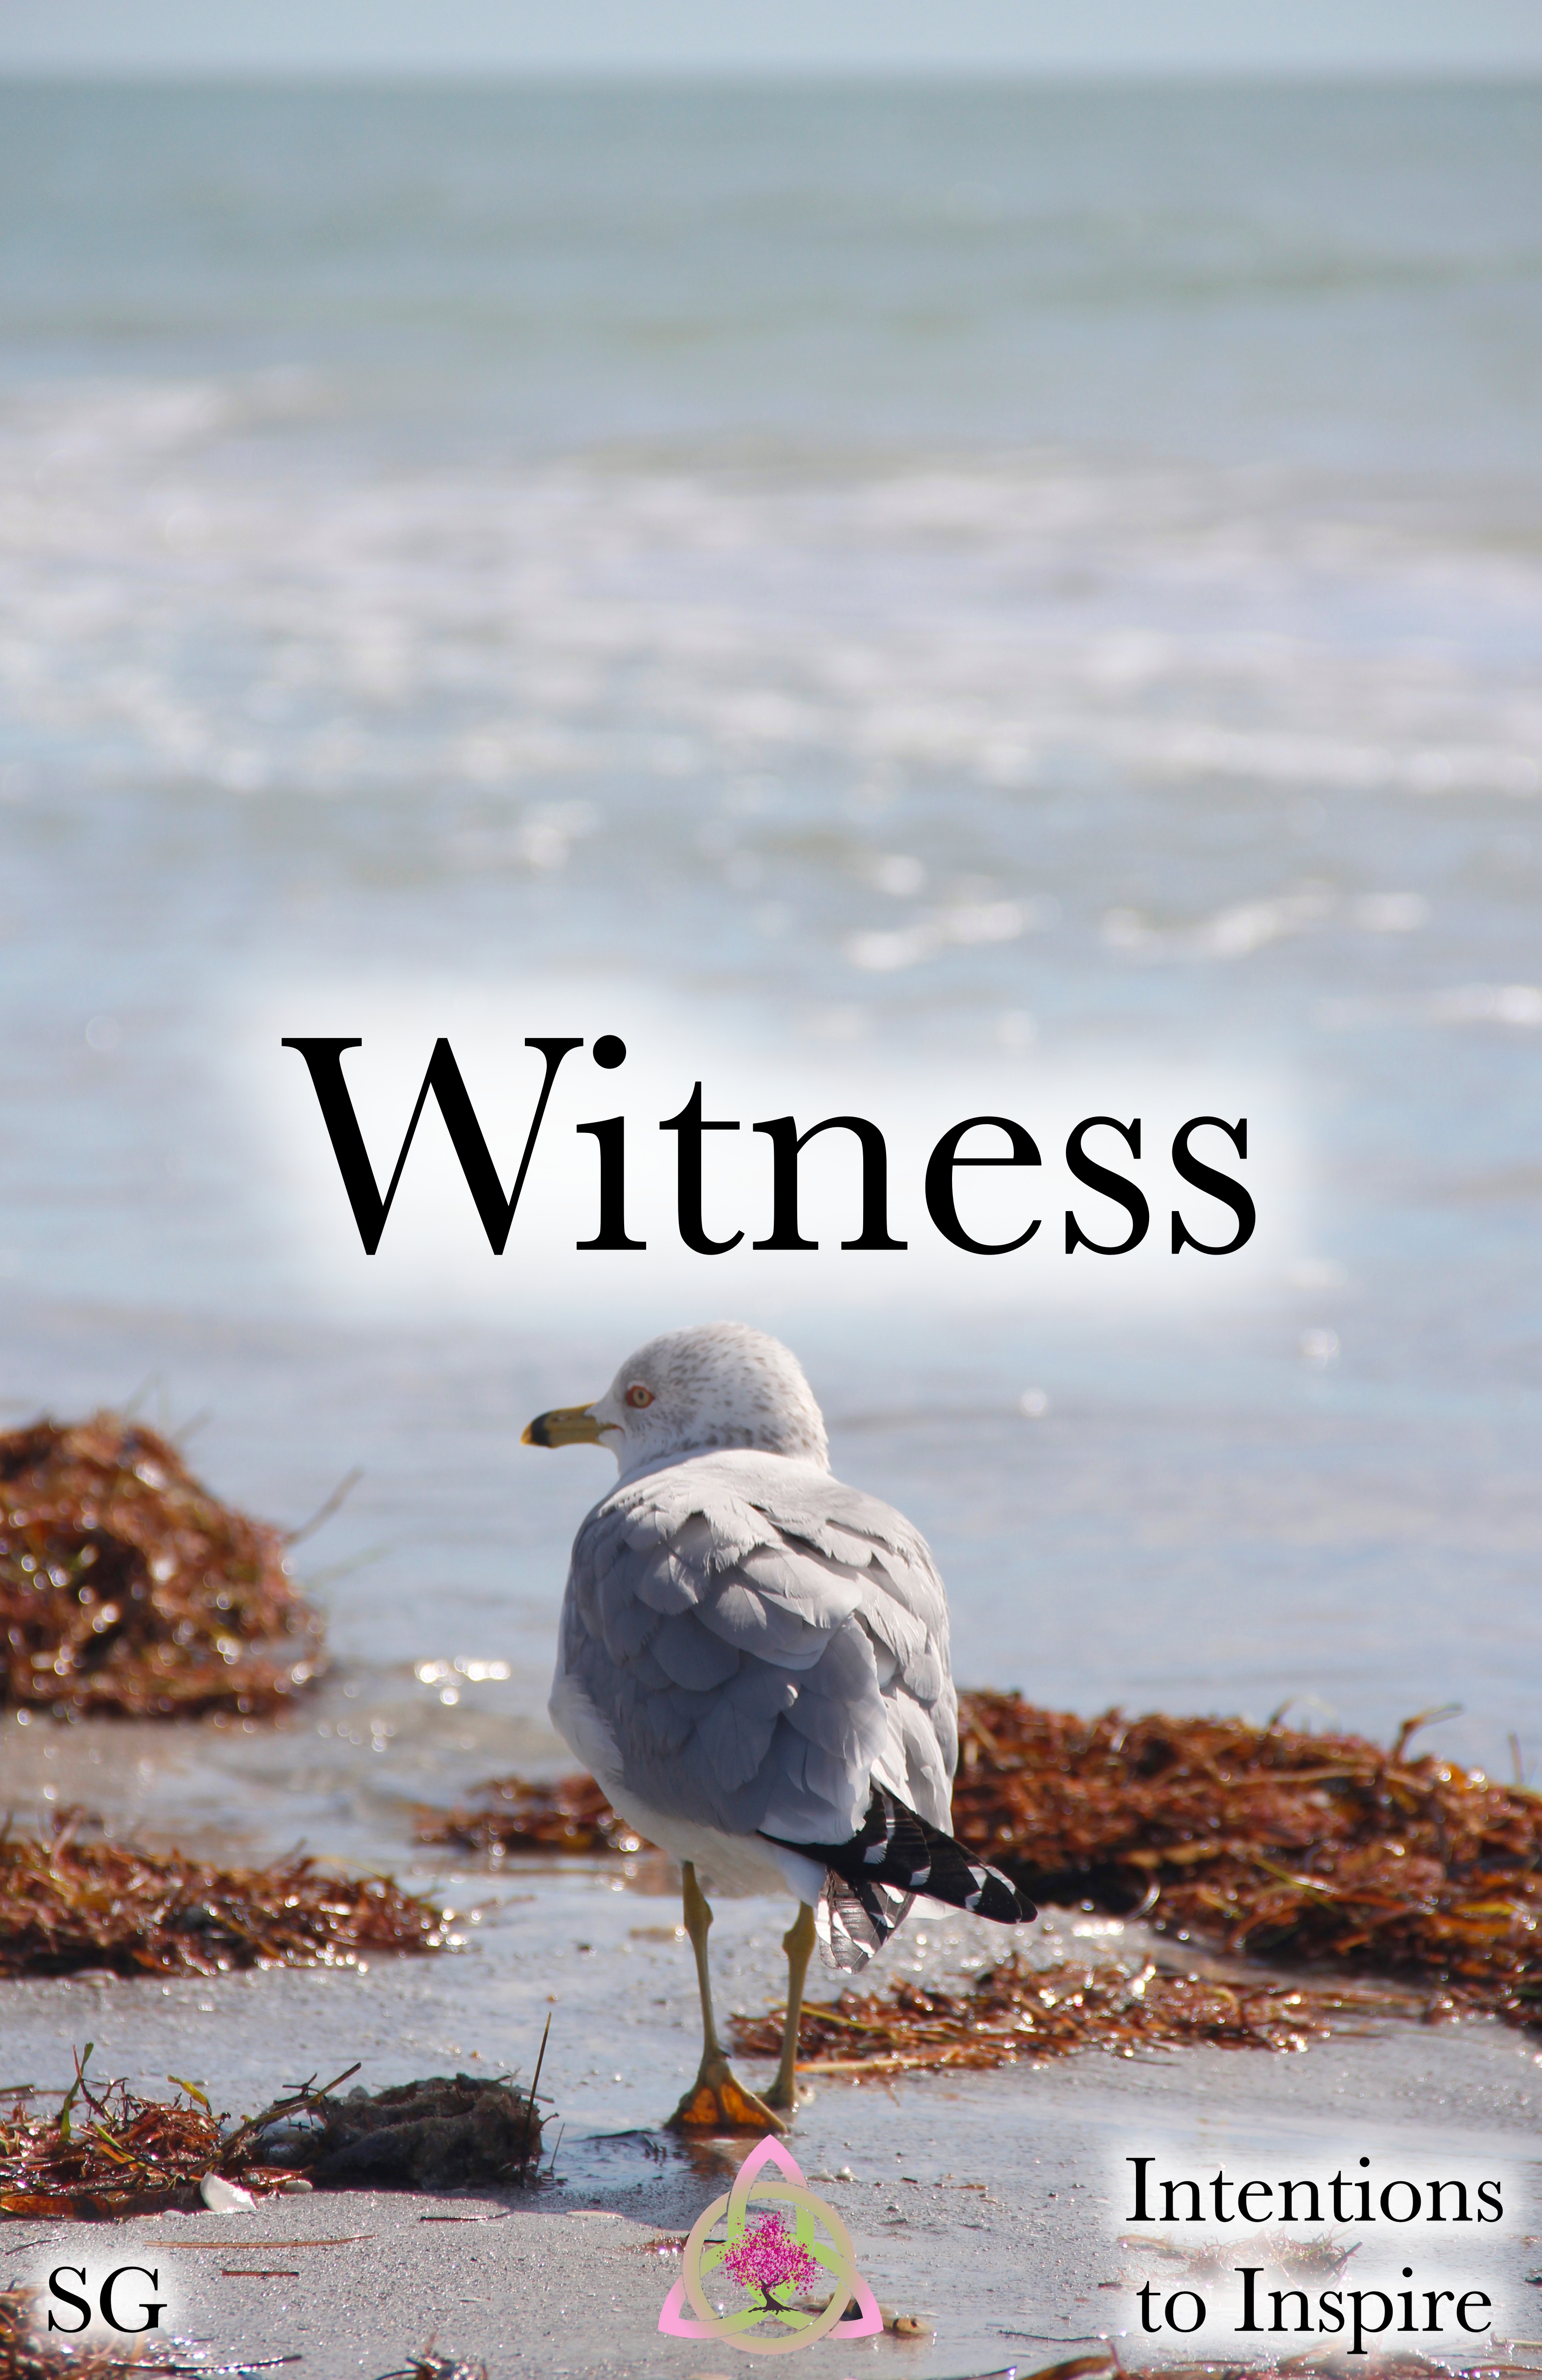 261-38-2-Witness-SG 2